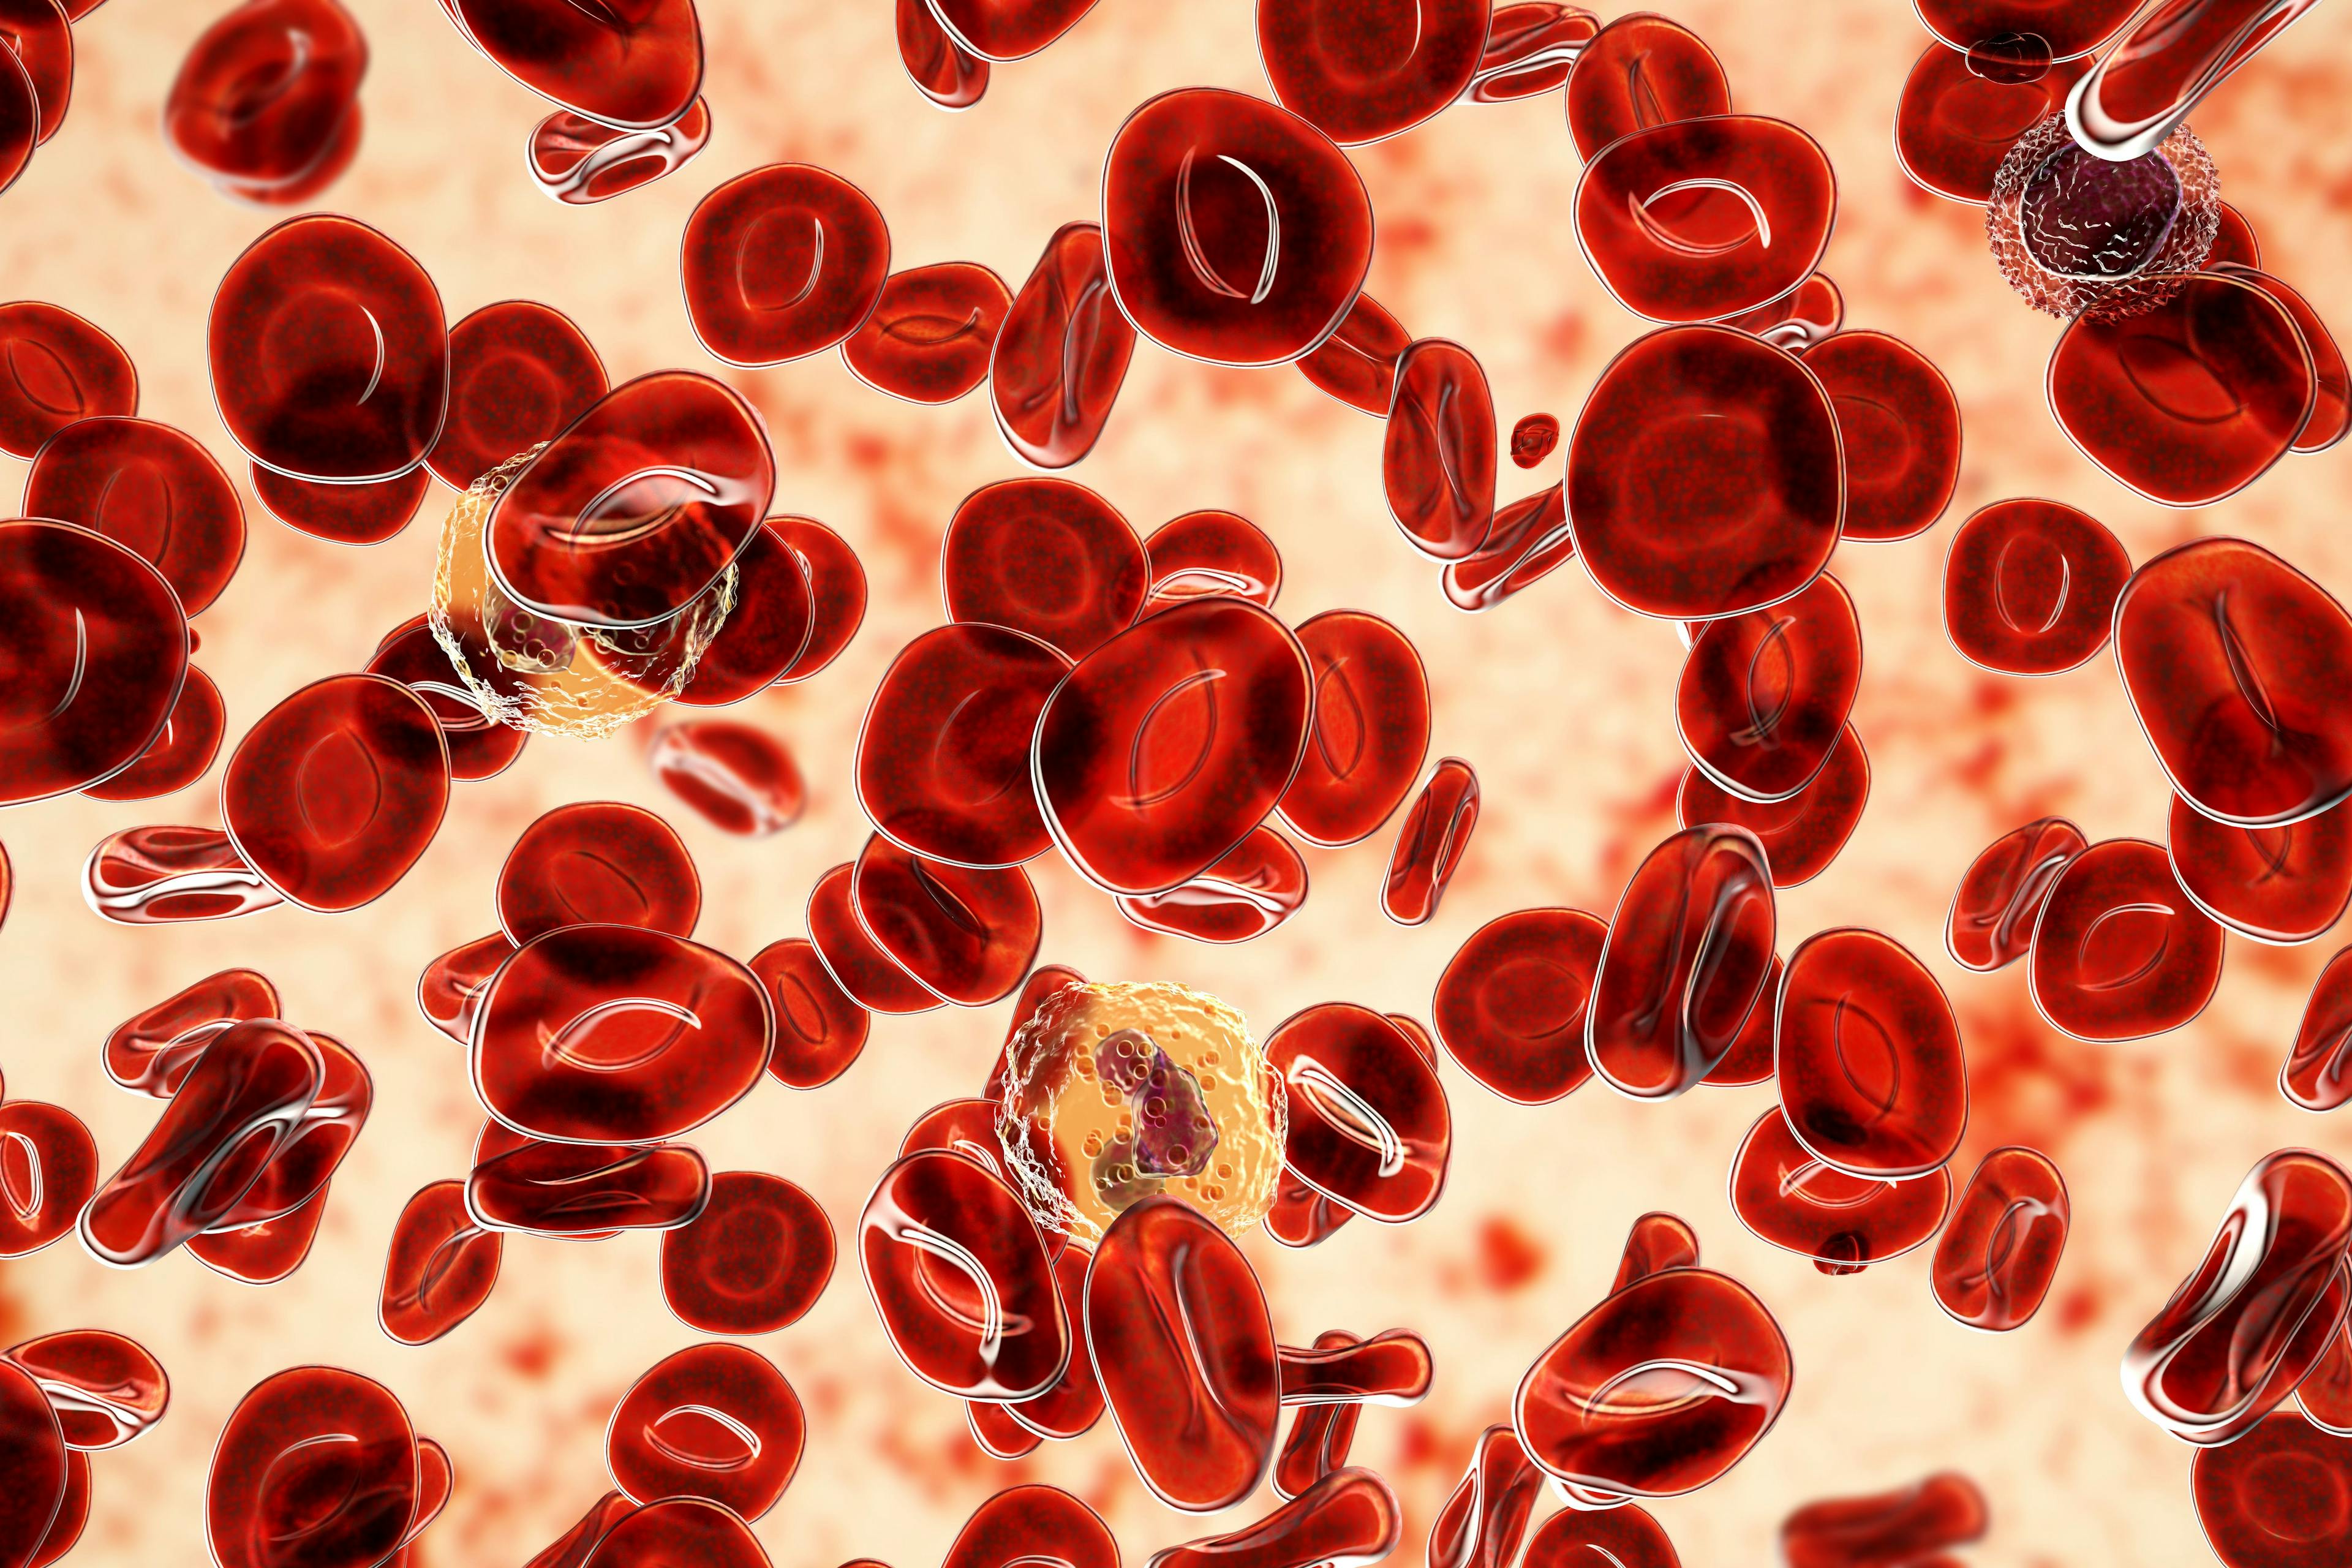 Polycythemia vera red blood cells | Image credit: Dr_Microbe - stock.adobe.com